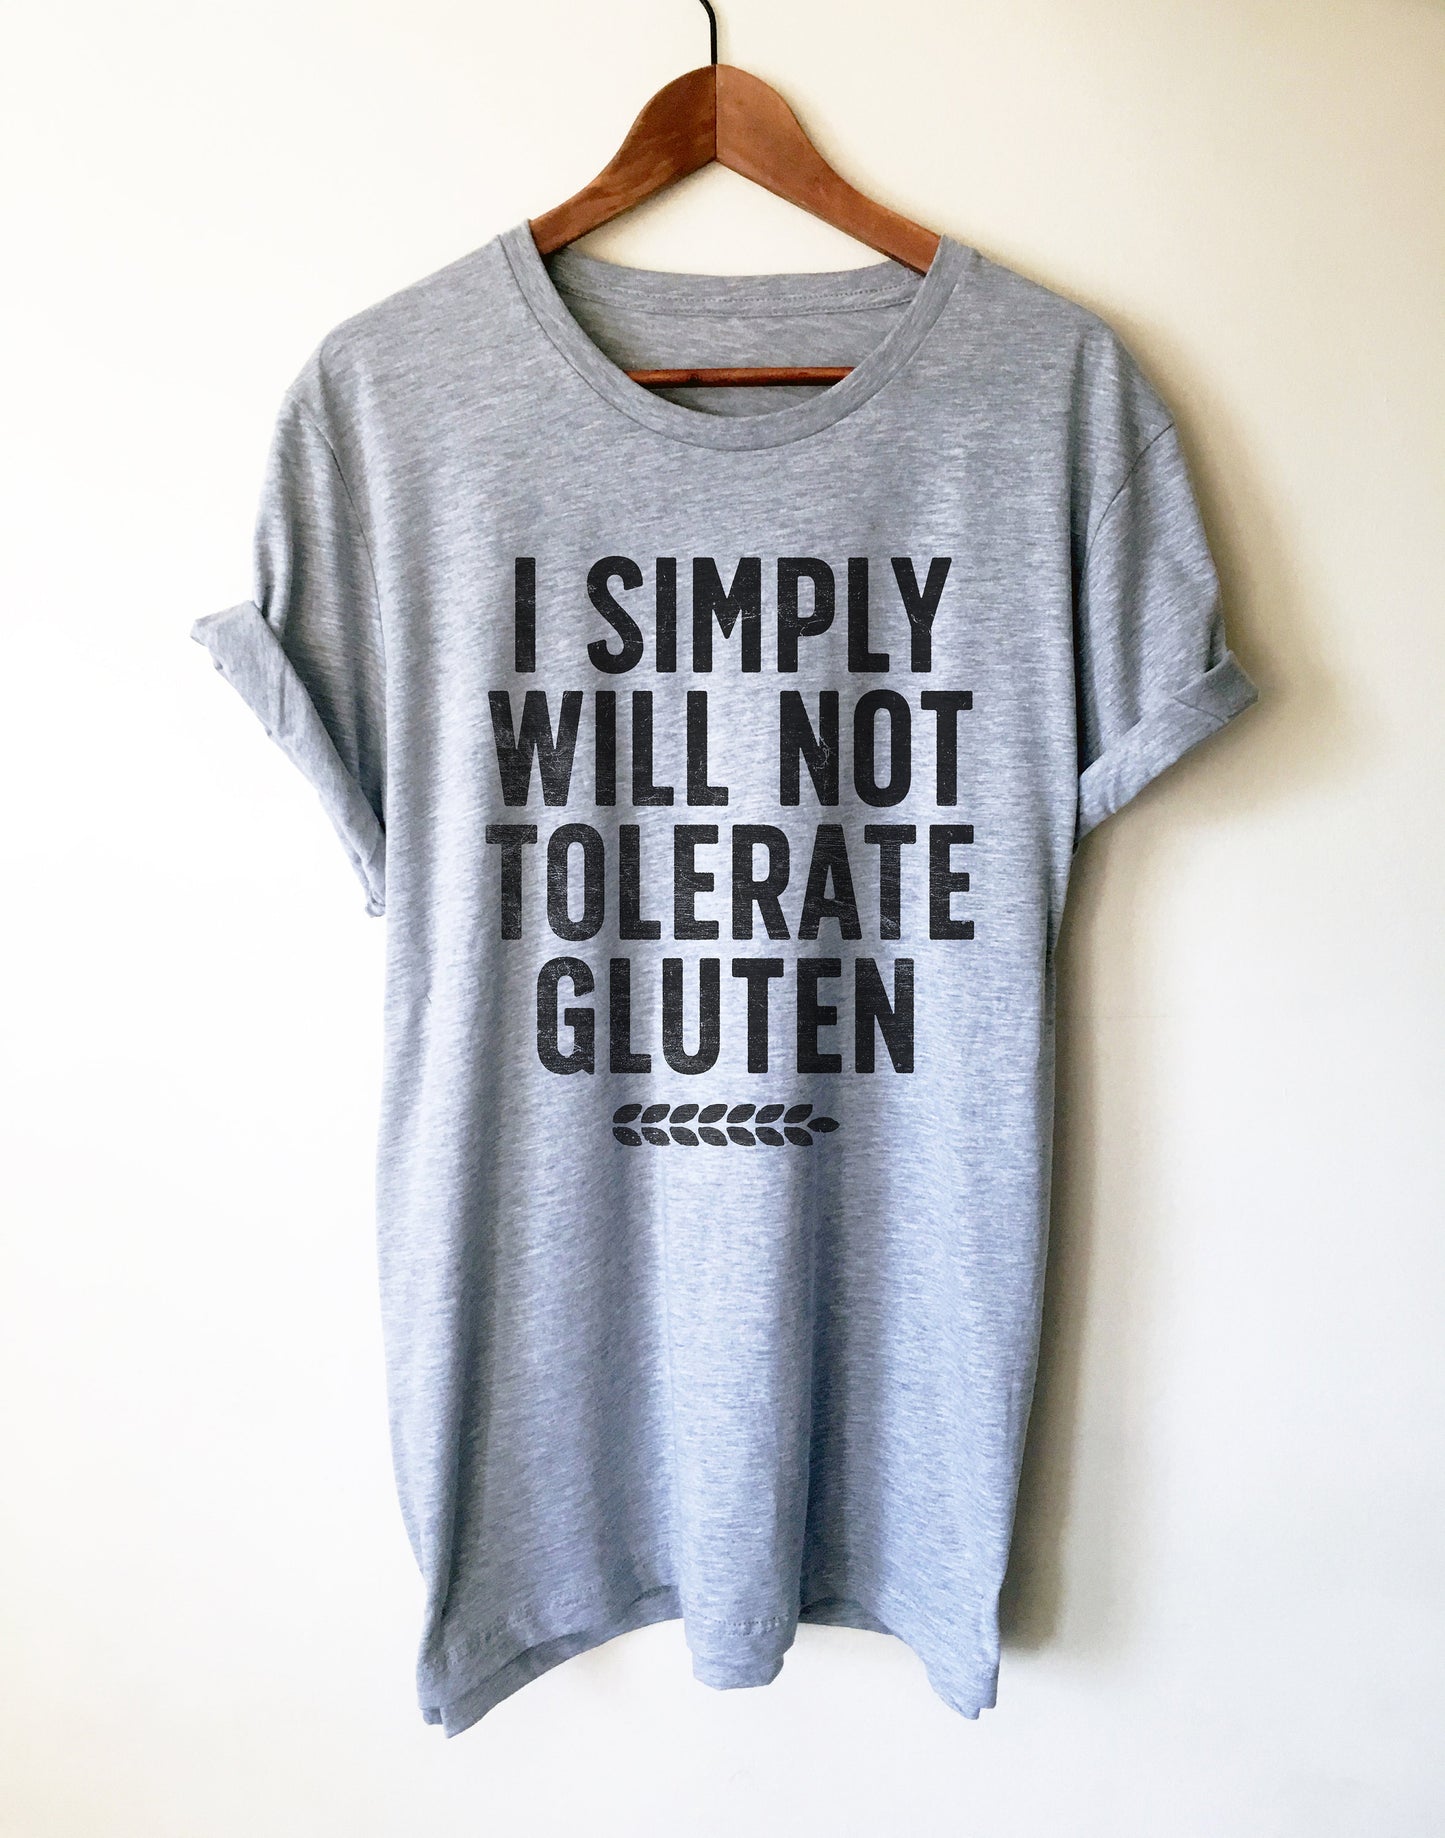 I Simply Will Not Tolerate Gluten Unisex Shirt - Gluten Free Shirt, Gluten Free Gift, Celiac, Low Carb, Ketogenic Diet Shirt, Ketones Shirt